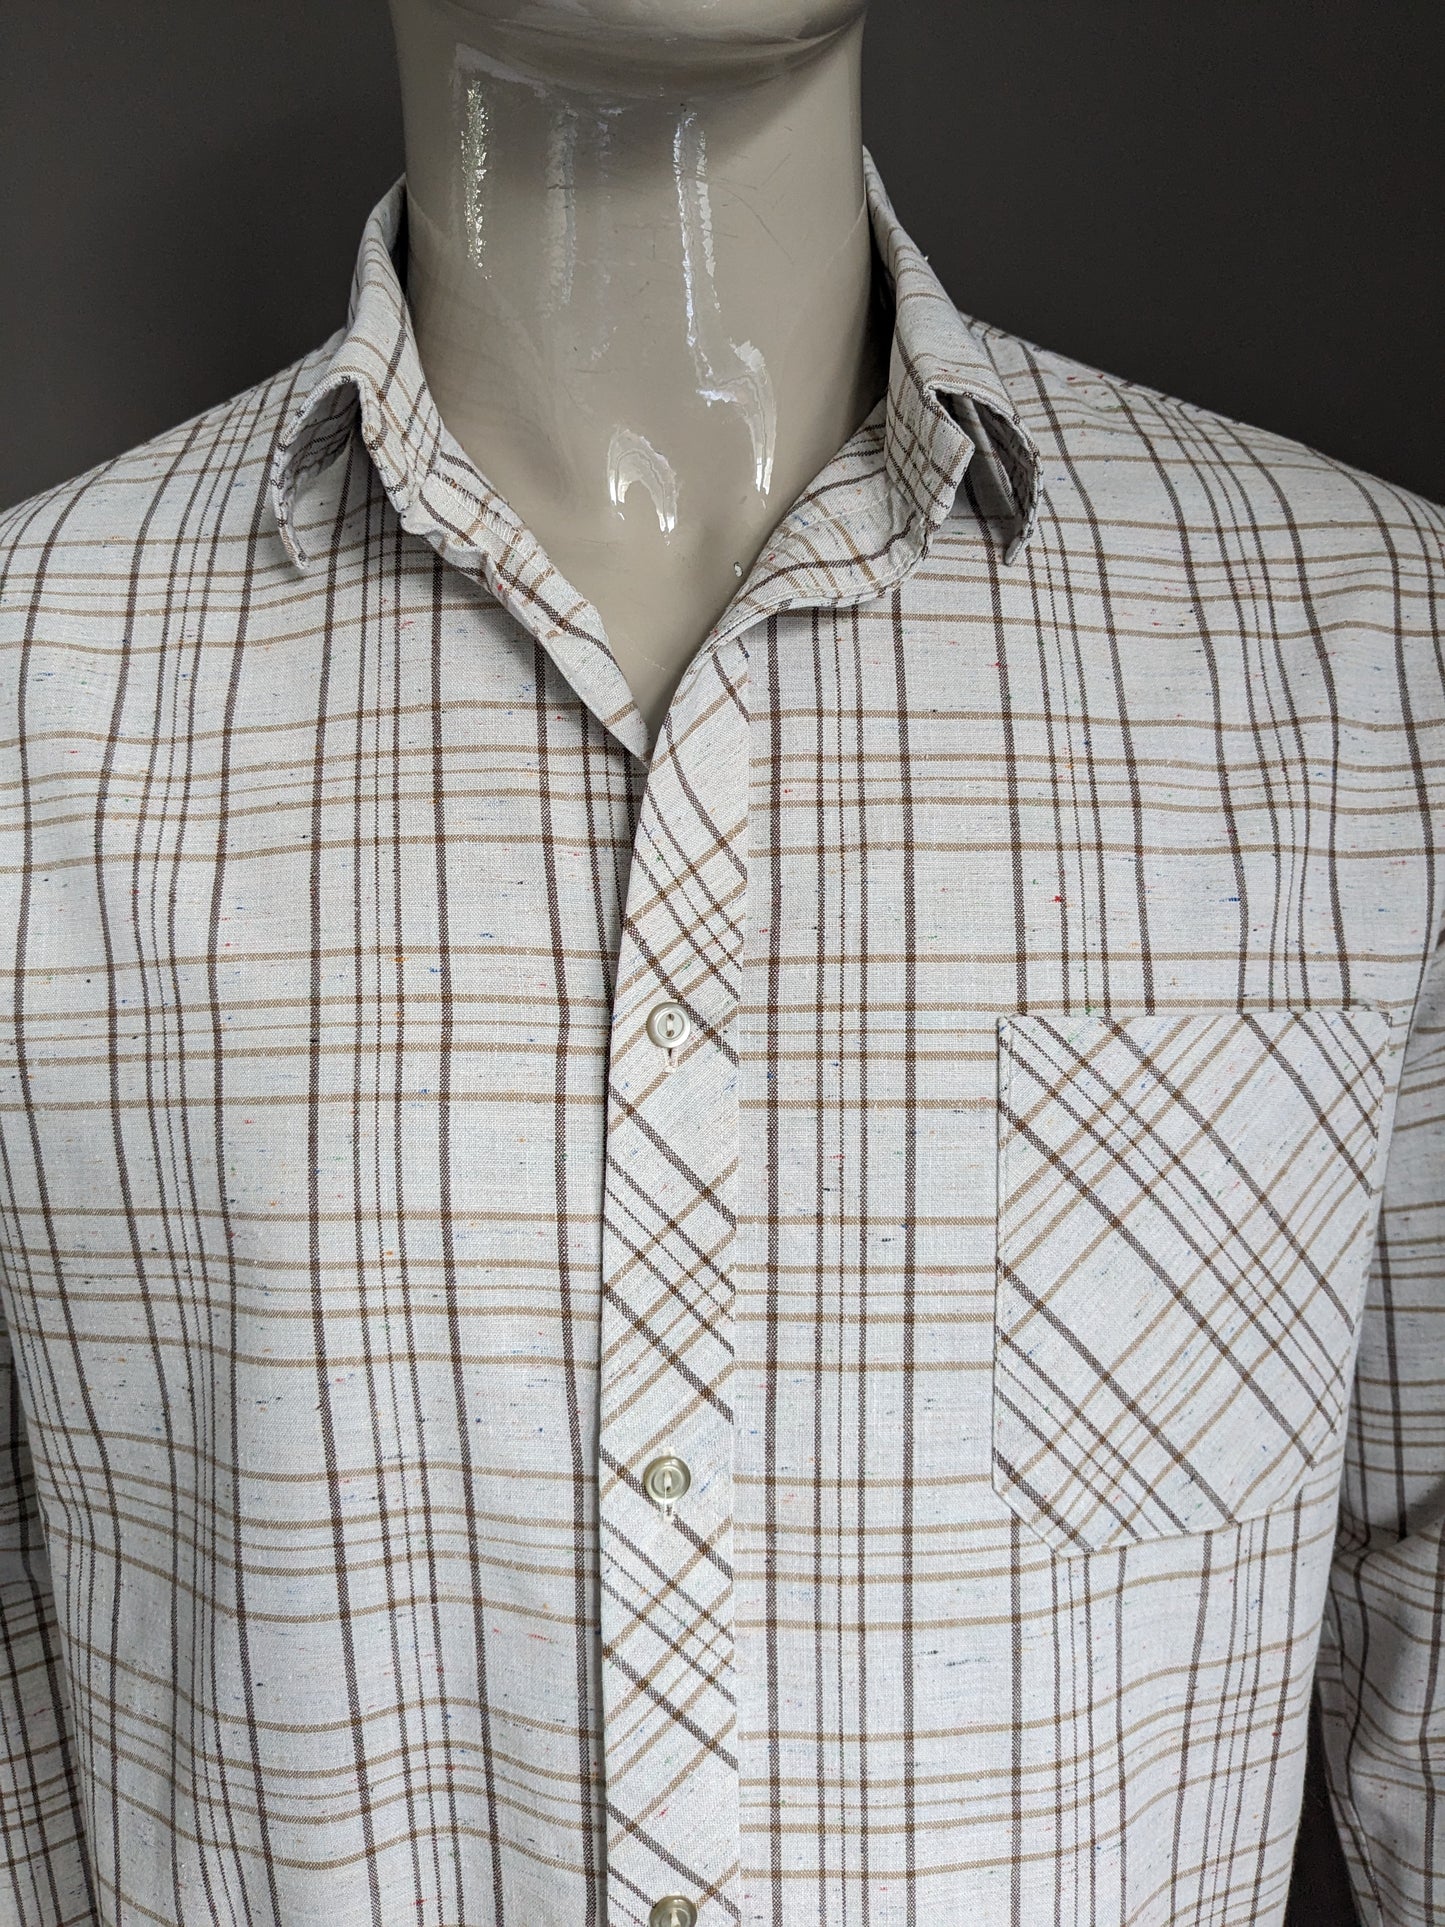 Vintage Merkloos overhemd. Beige Bruin geruit met gekleurde puntjes. Maat L.